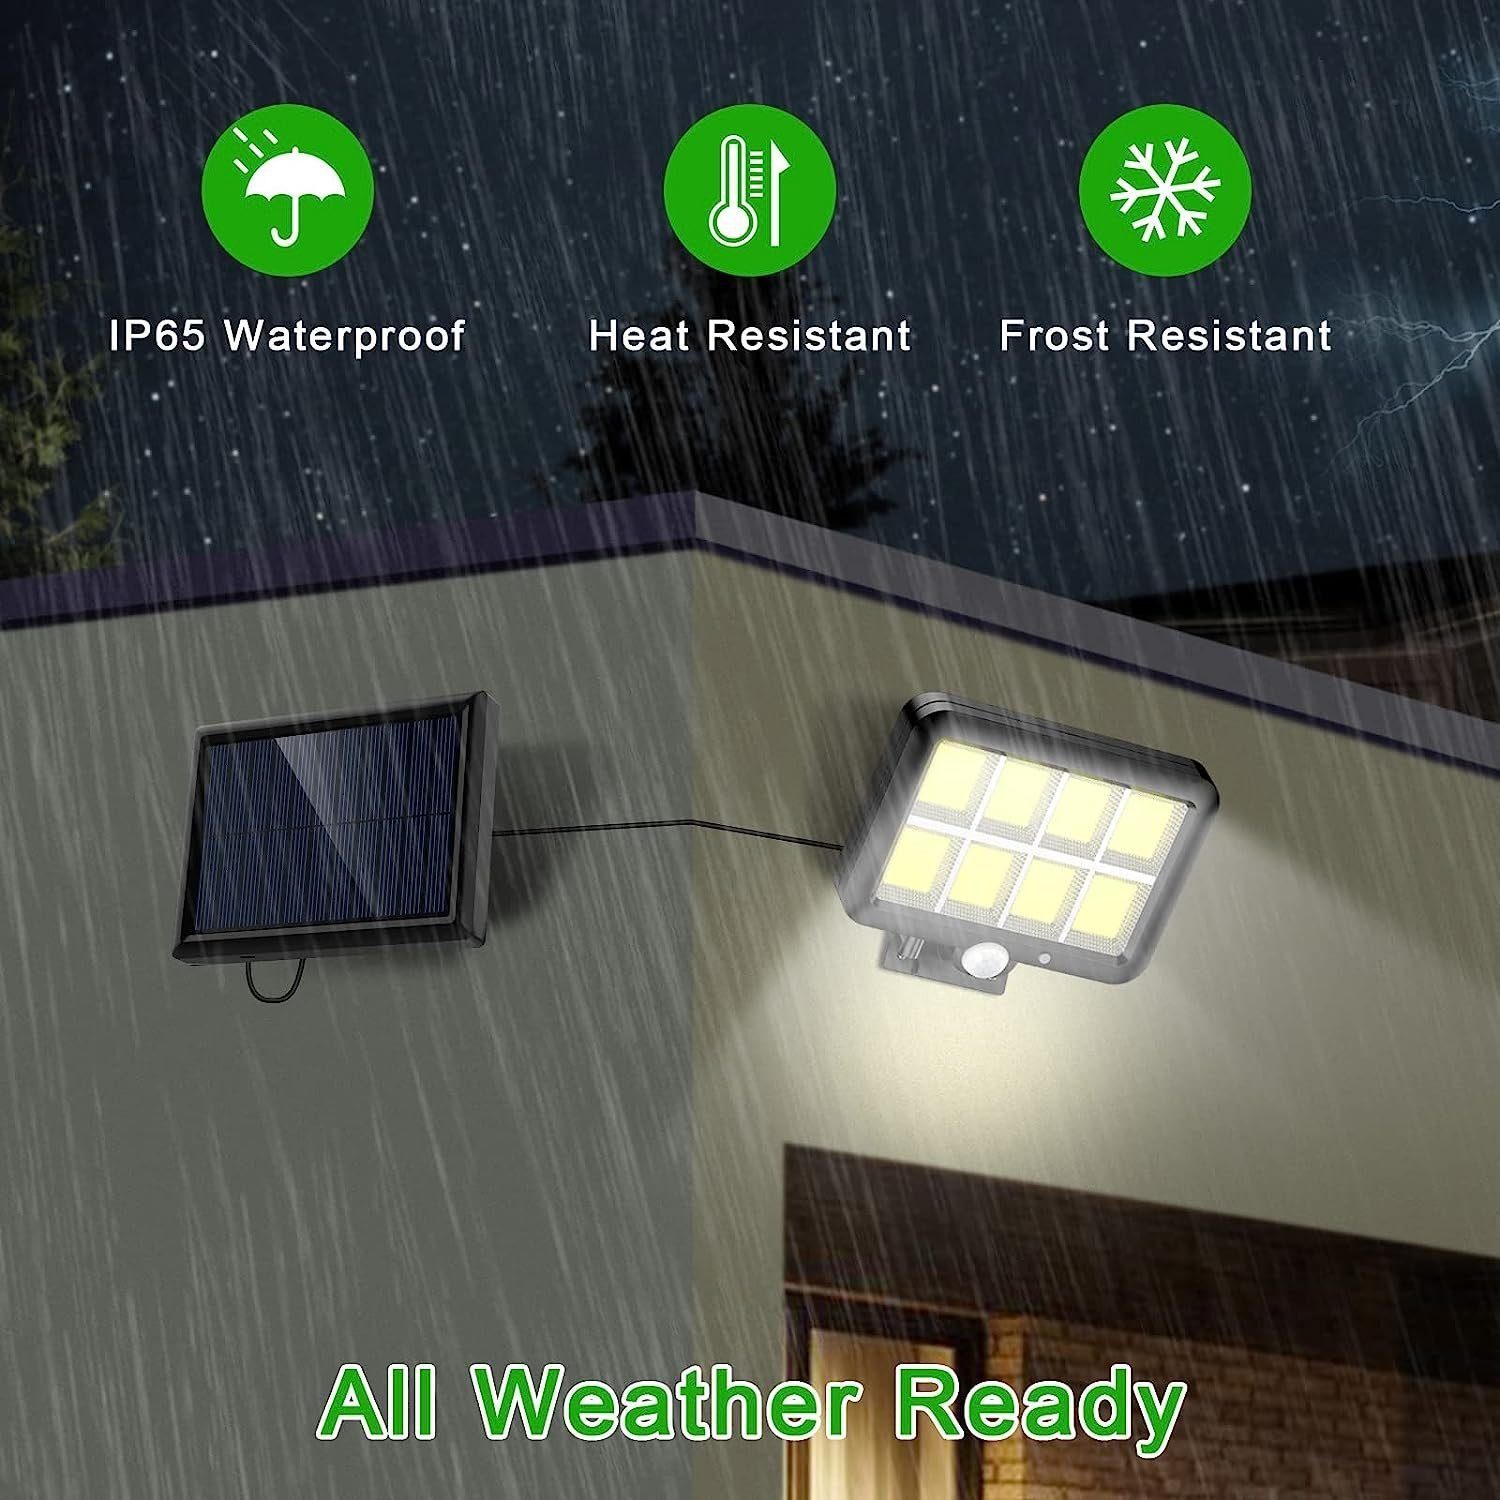 DOPWii LED Solarleuchte 2PCS Solarlampe,3 fest Kabel,160COB Lampenperle, Modi,mit integriert Bewegungsmelder&5M LED